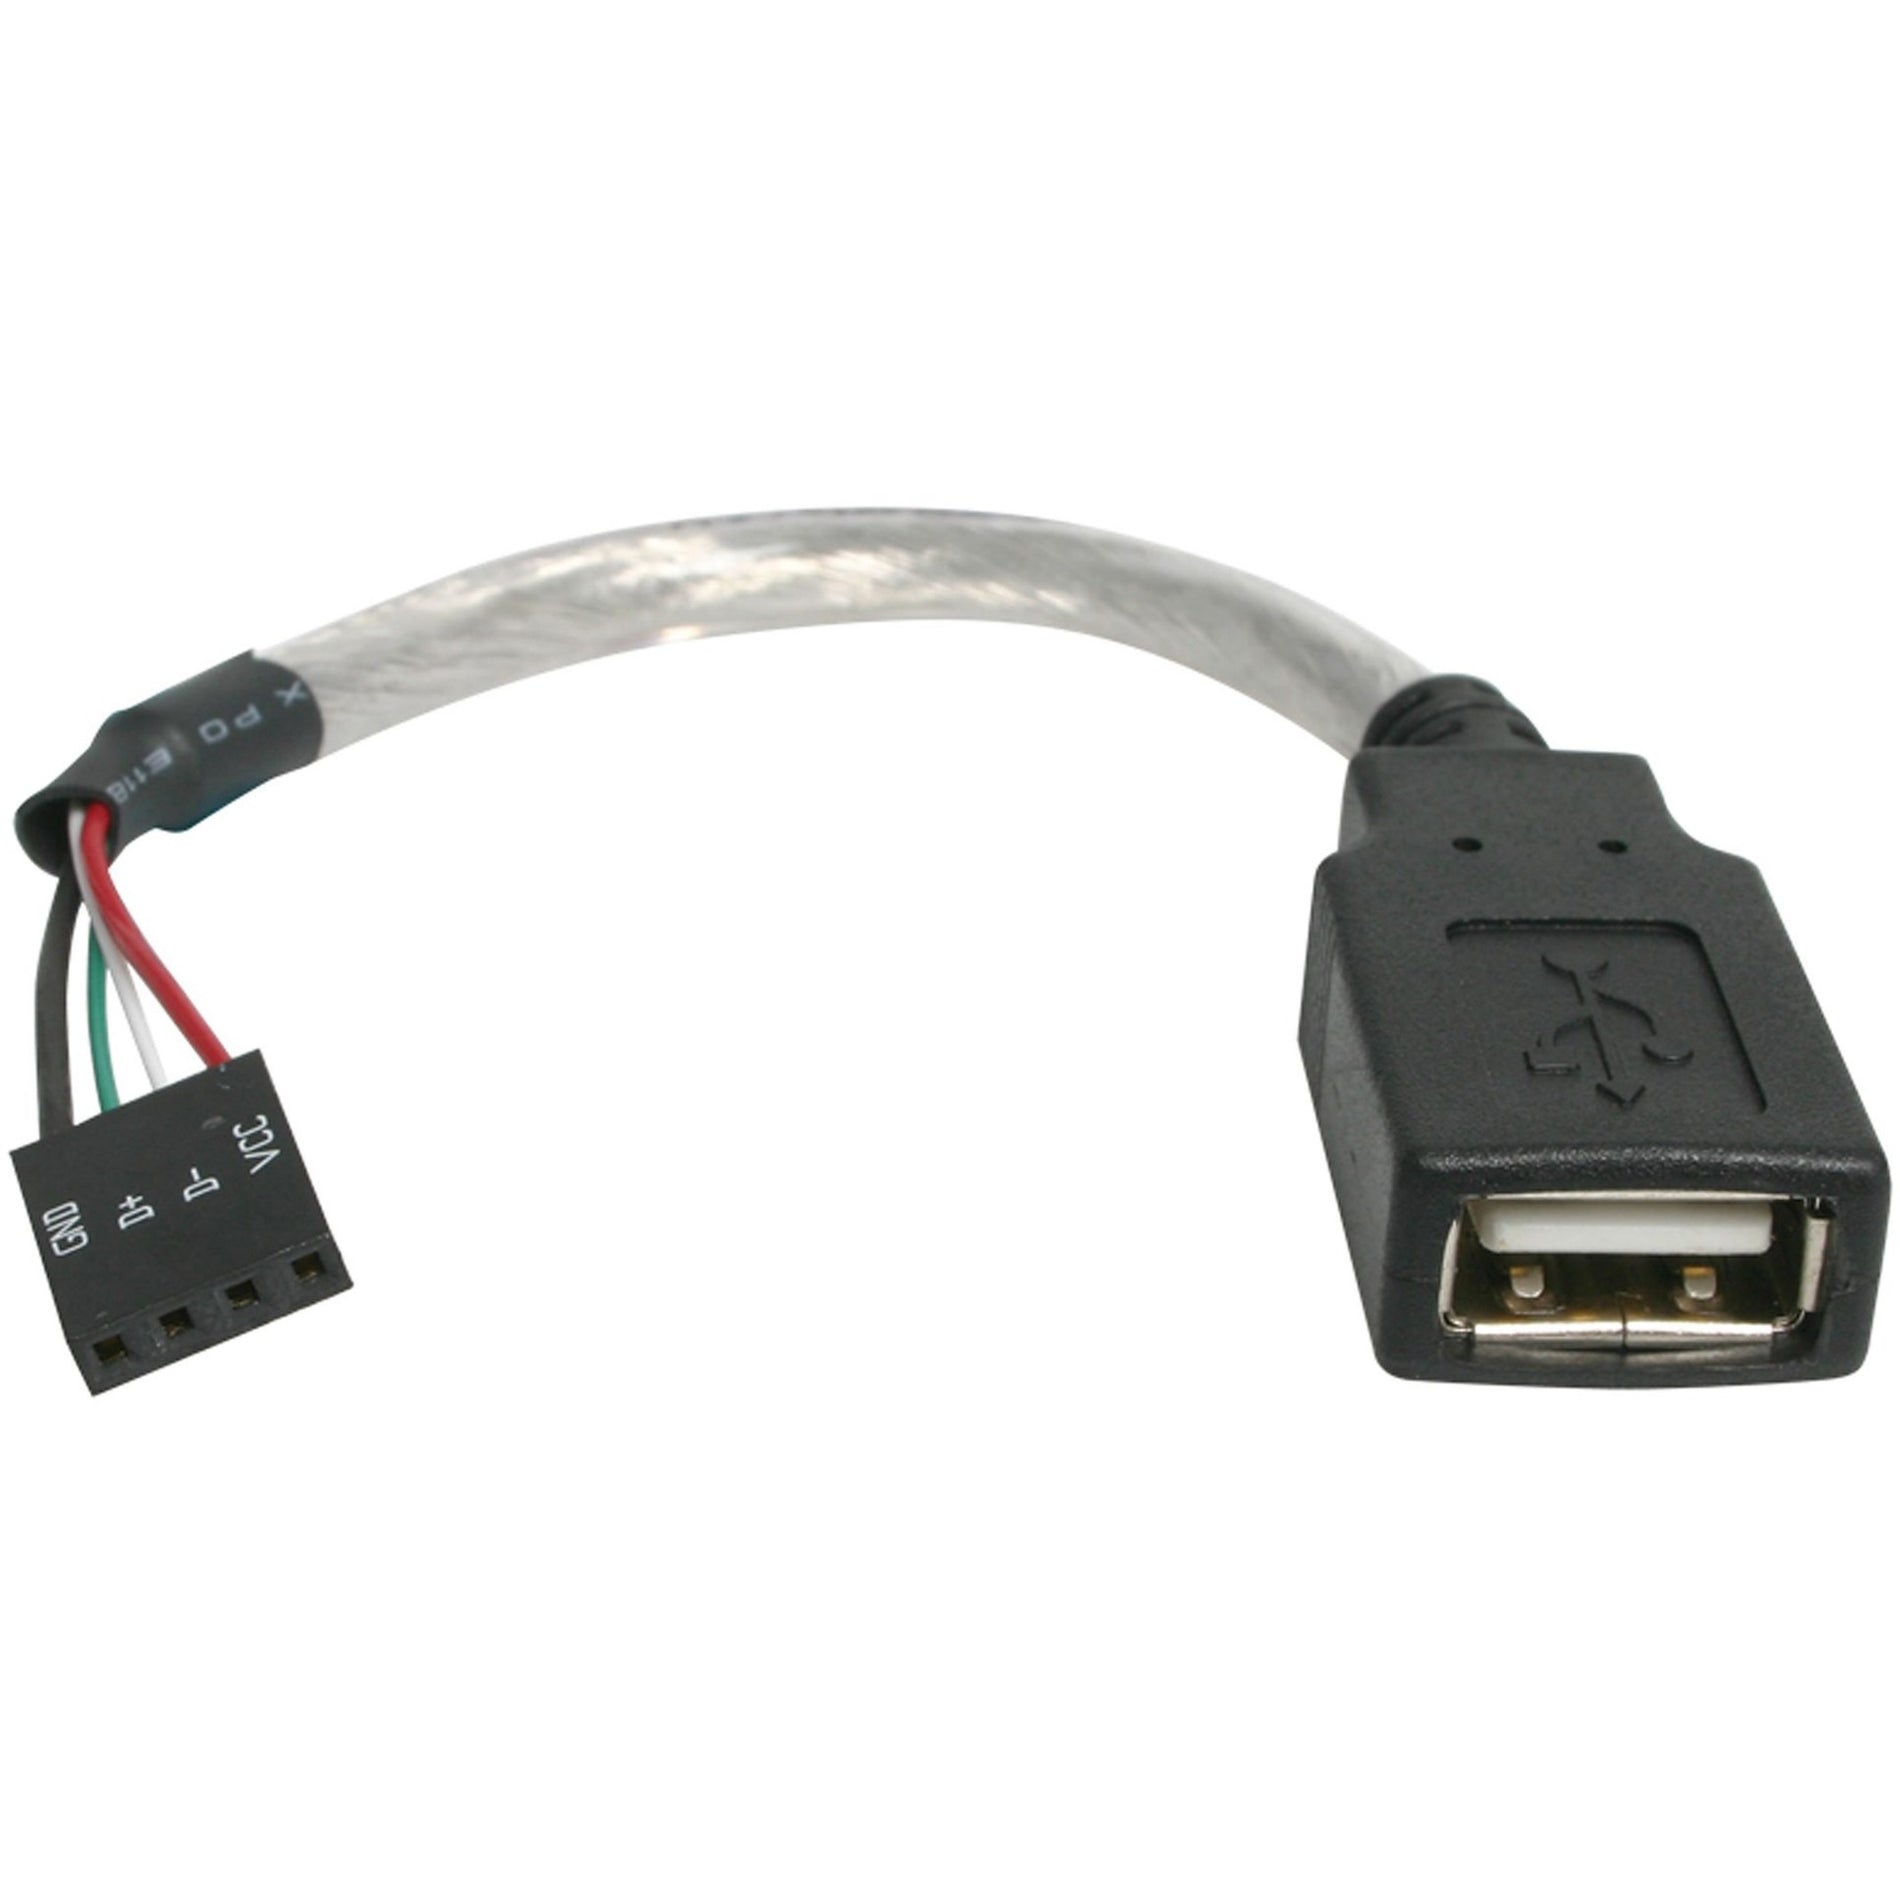 StarTech.com USBMBADAPT USB 2.0 Cable - Easily Convert Internal Motherboard Header Port to USB A Female Port